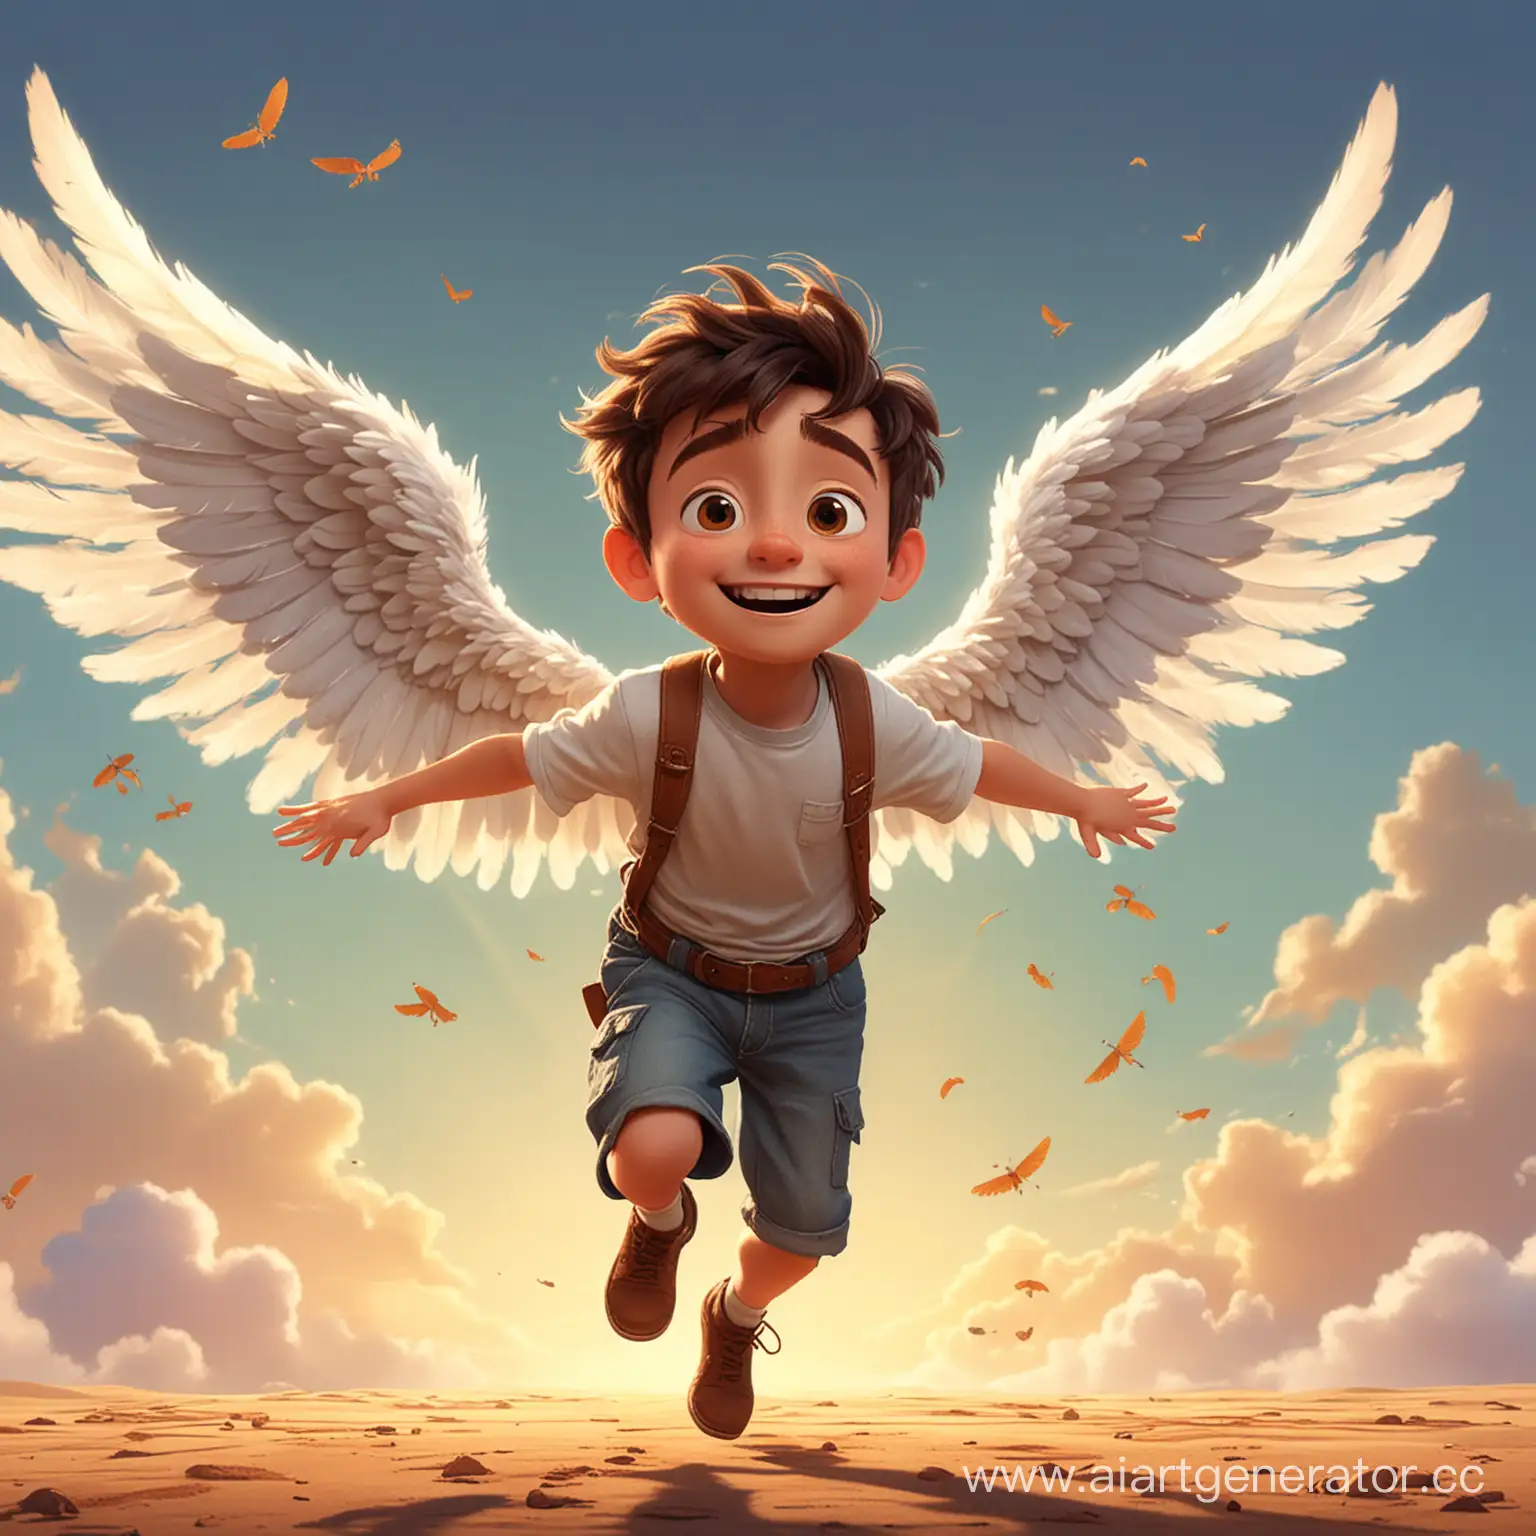 Joyful-Boy-Soars-with-Homemade-Wings-Inspired-by-Icarus-Pixar-Style-Art